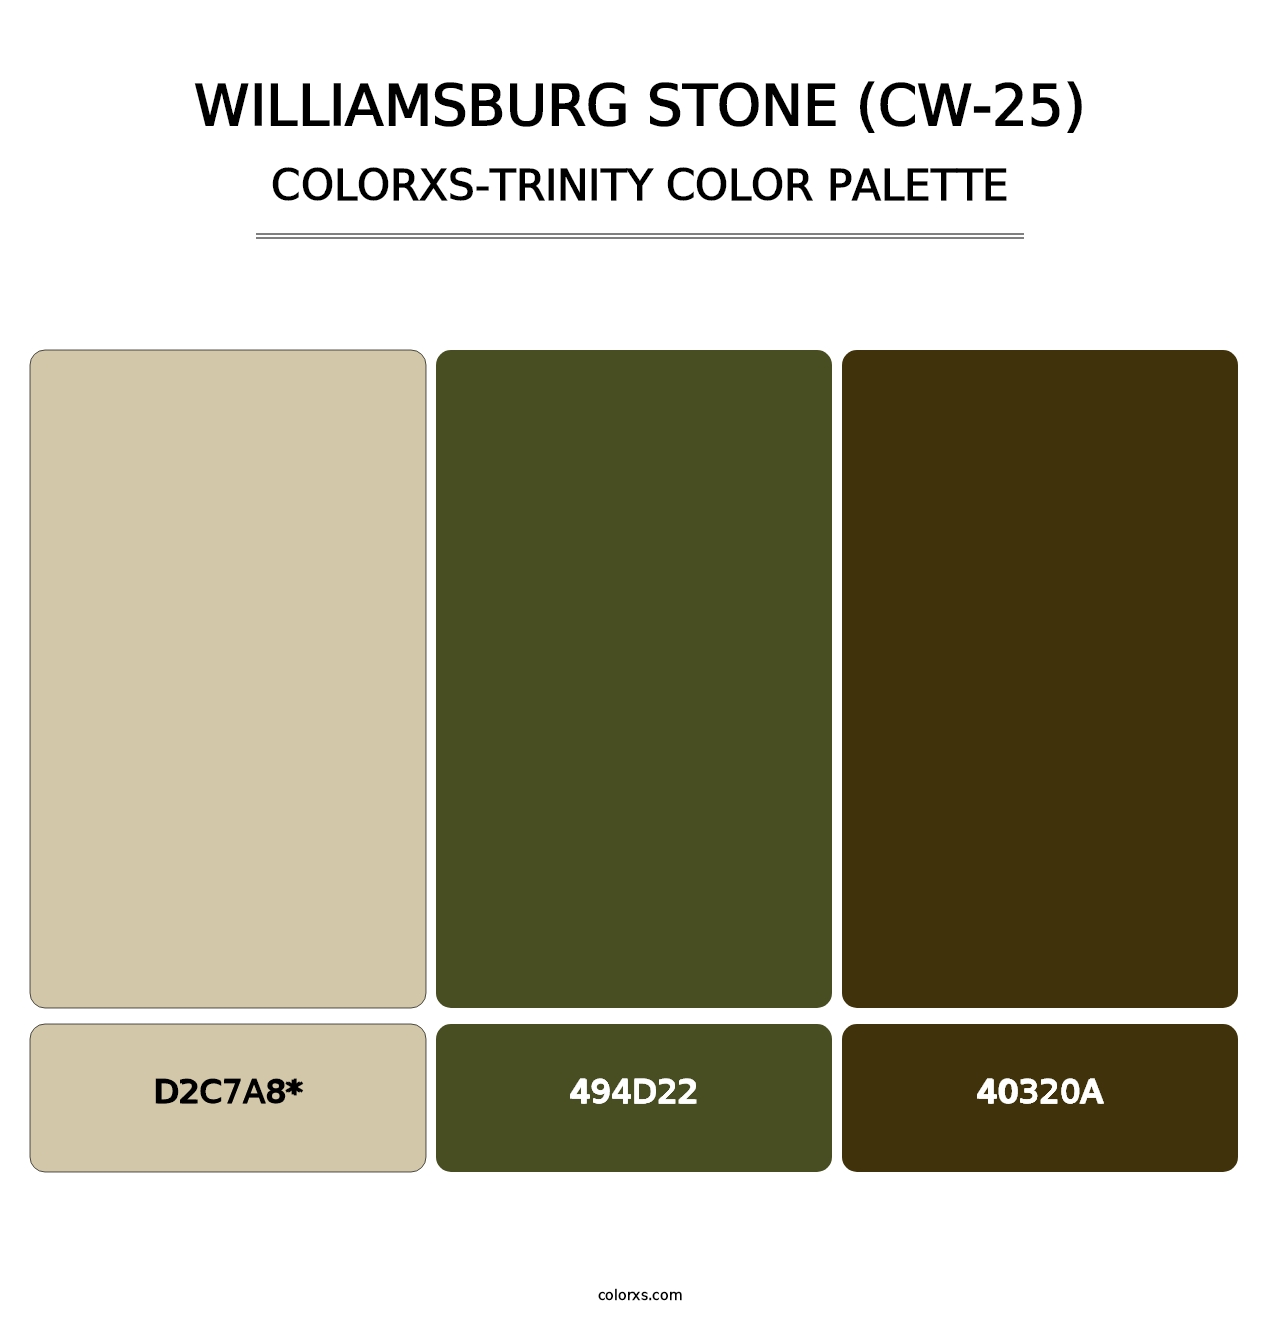 Williamsburg Stone (CW-25) - Colorxs Trinity Palette